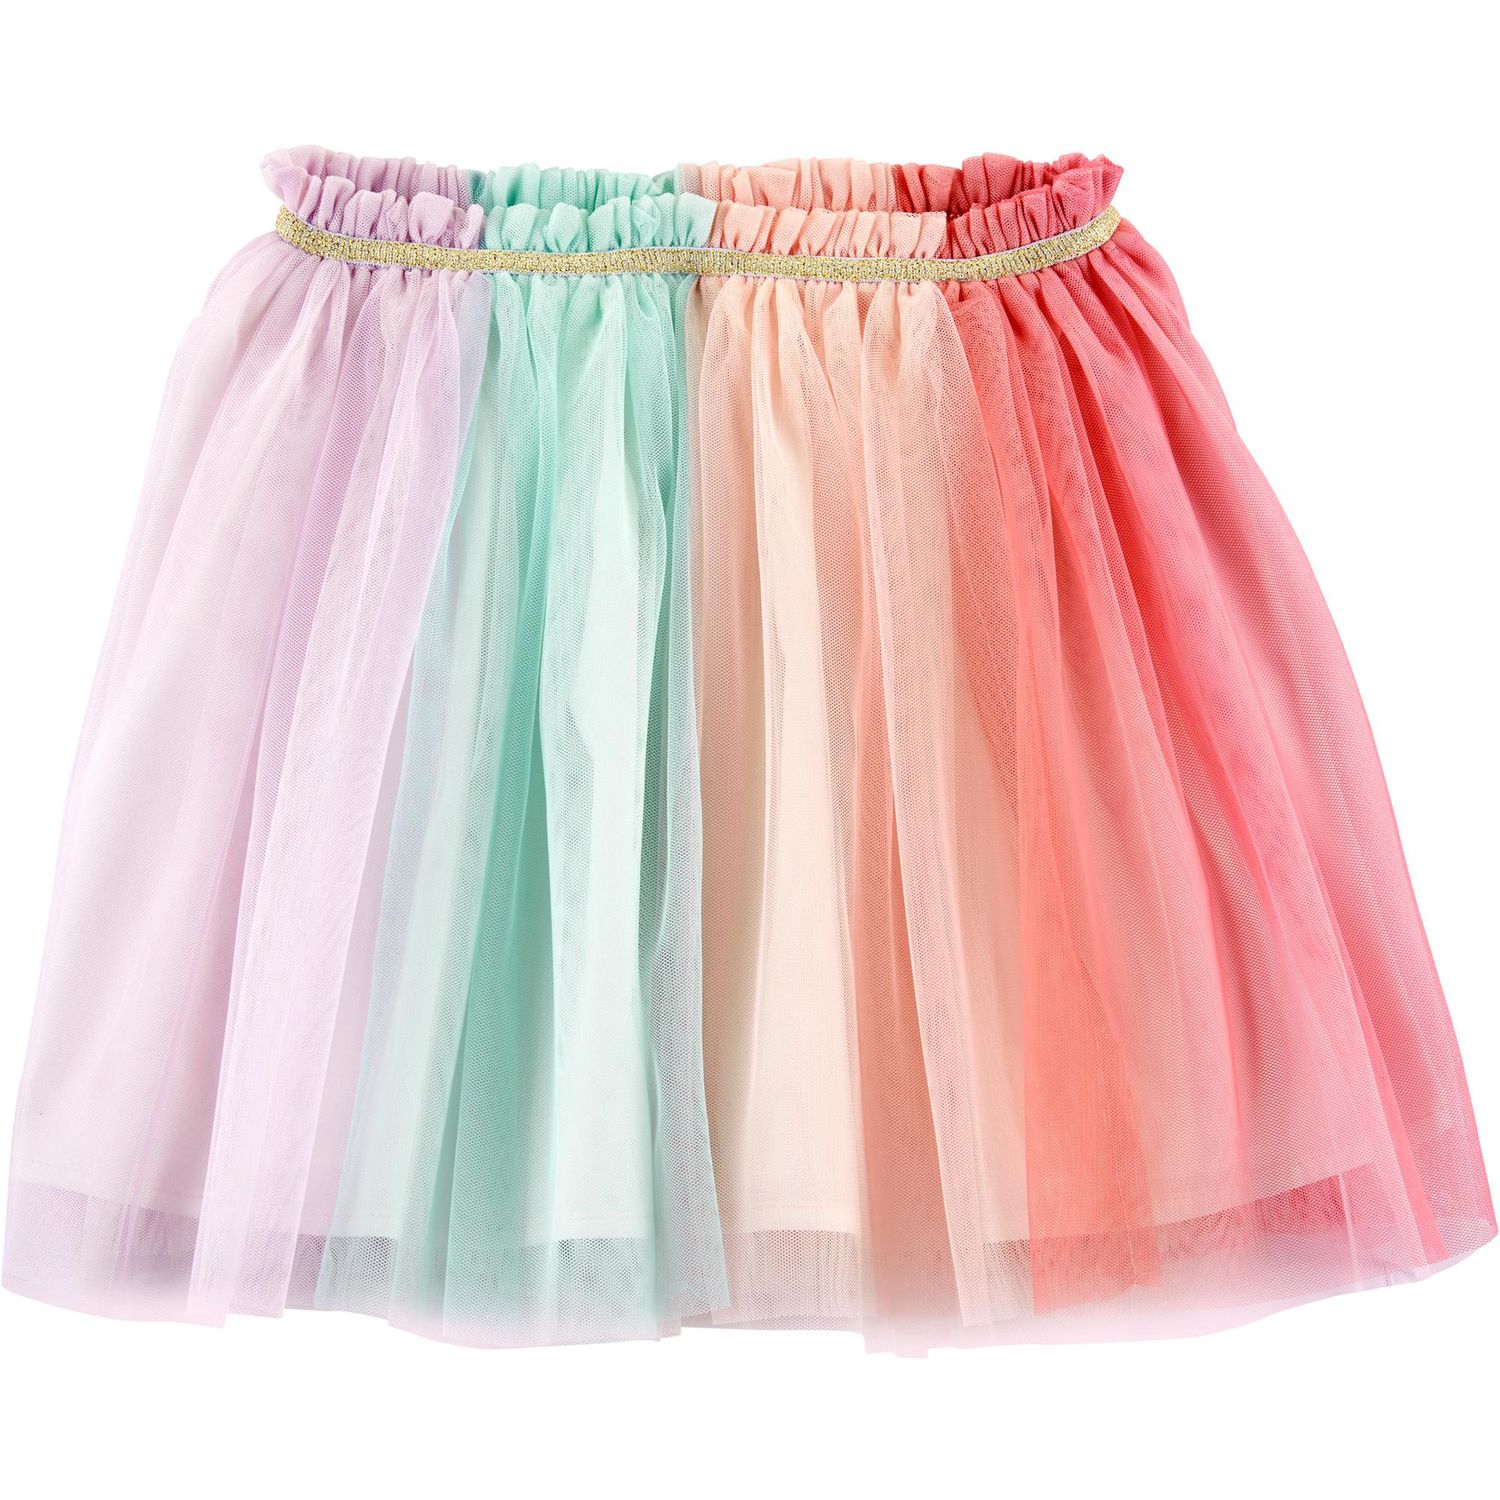 rainbow color tutu skirt